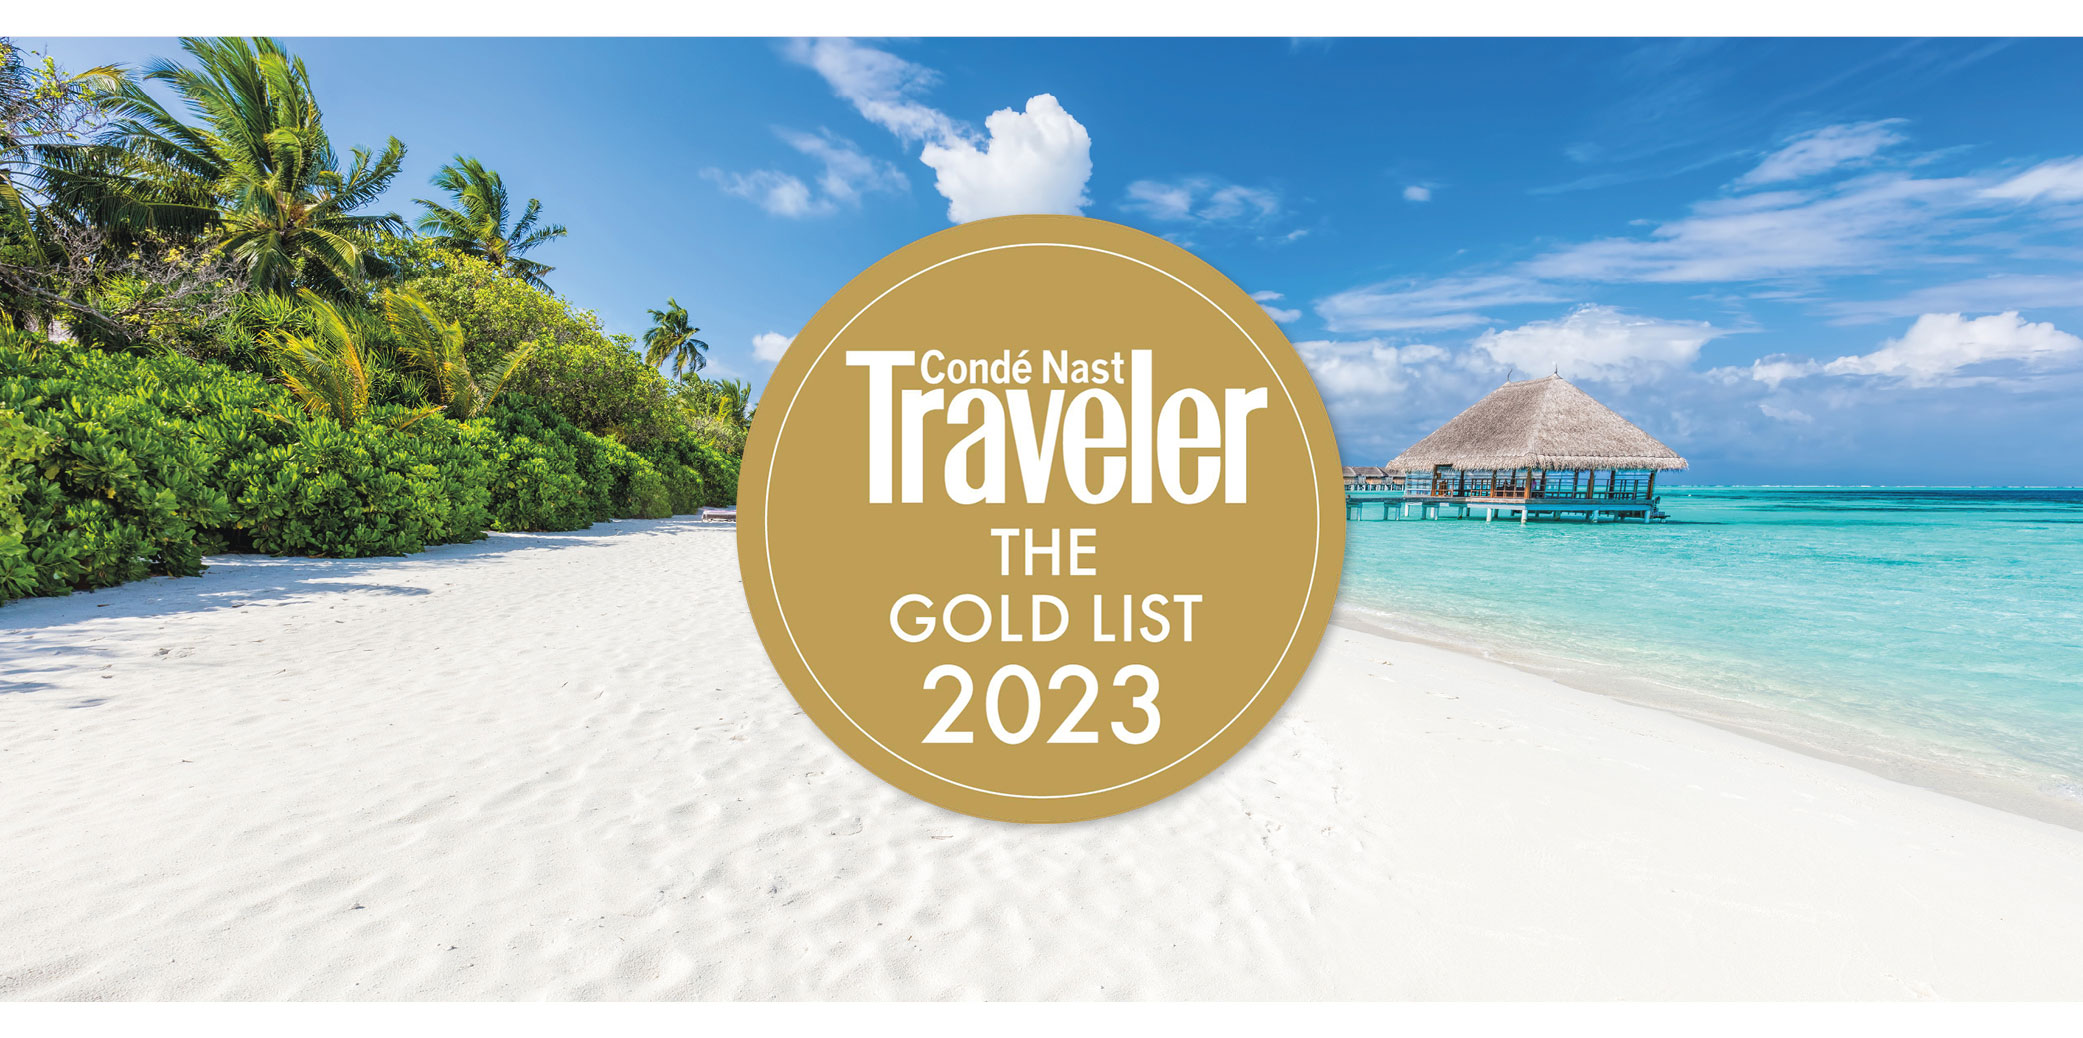 Conde Nast Traveller Gold List 2023 IAB Travel